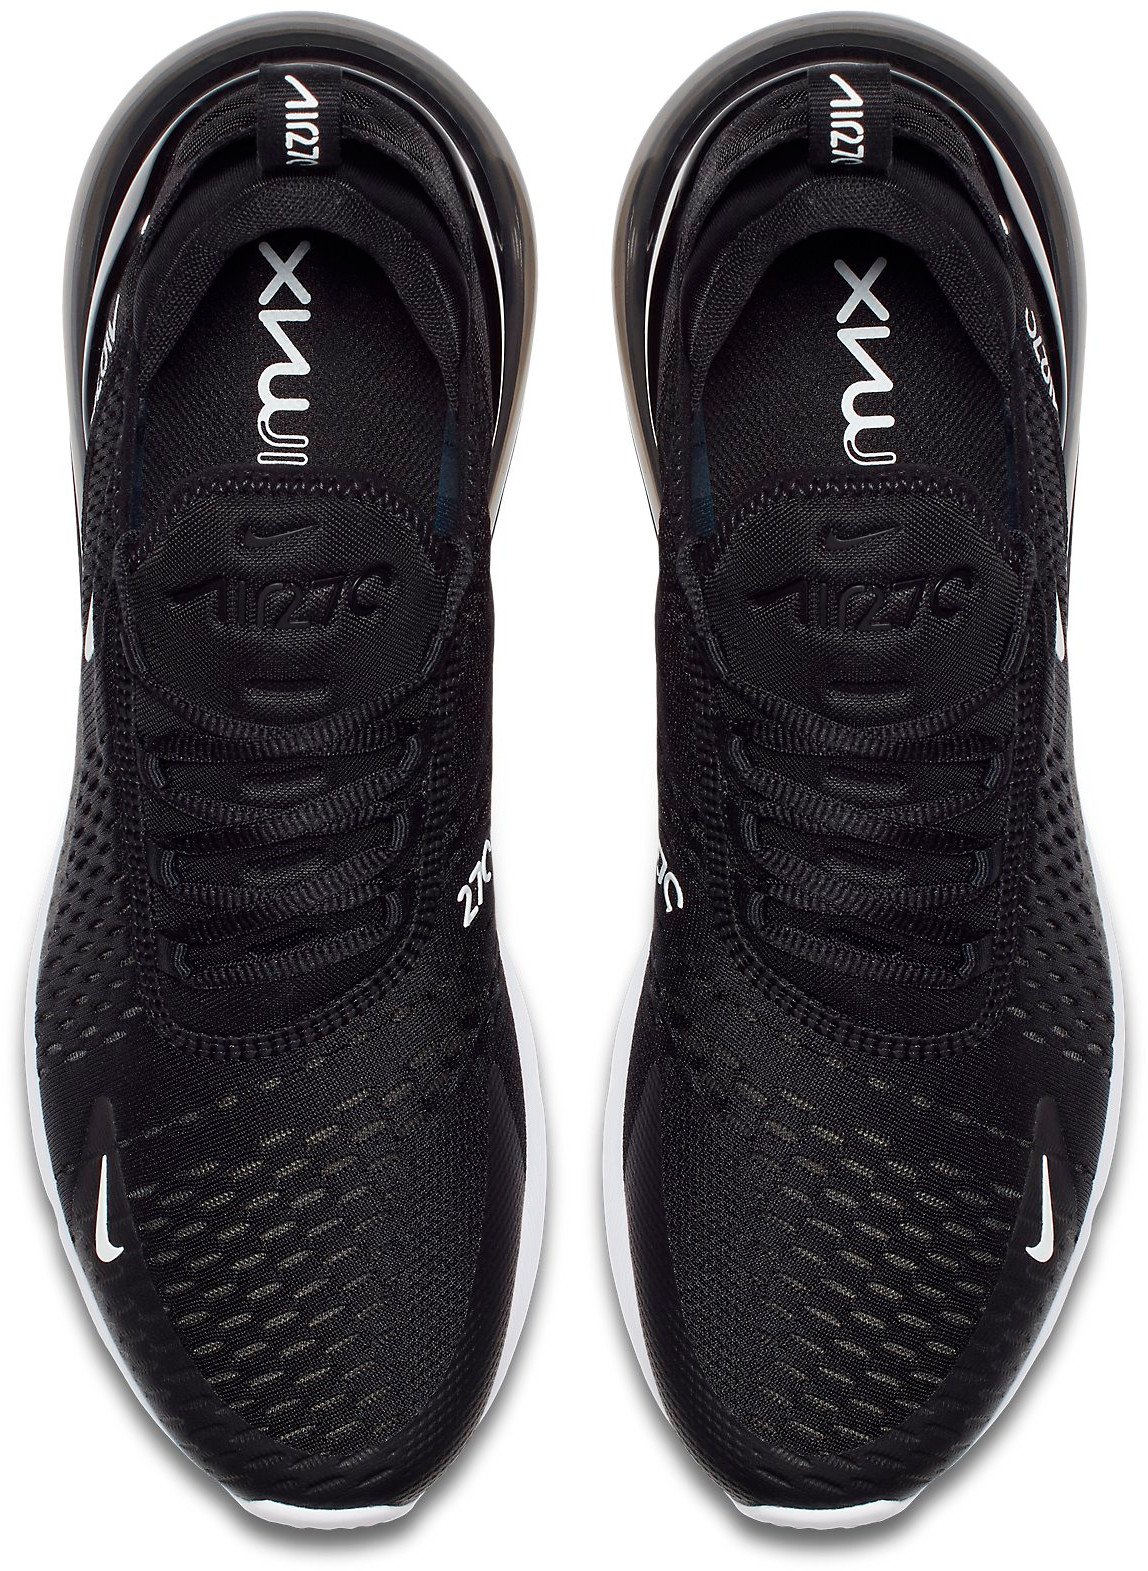 Shoes Nike MAX 270 -